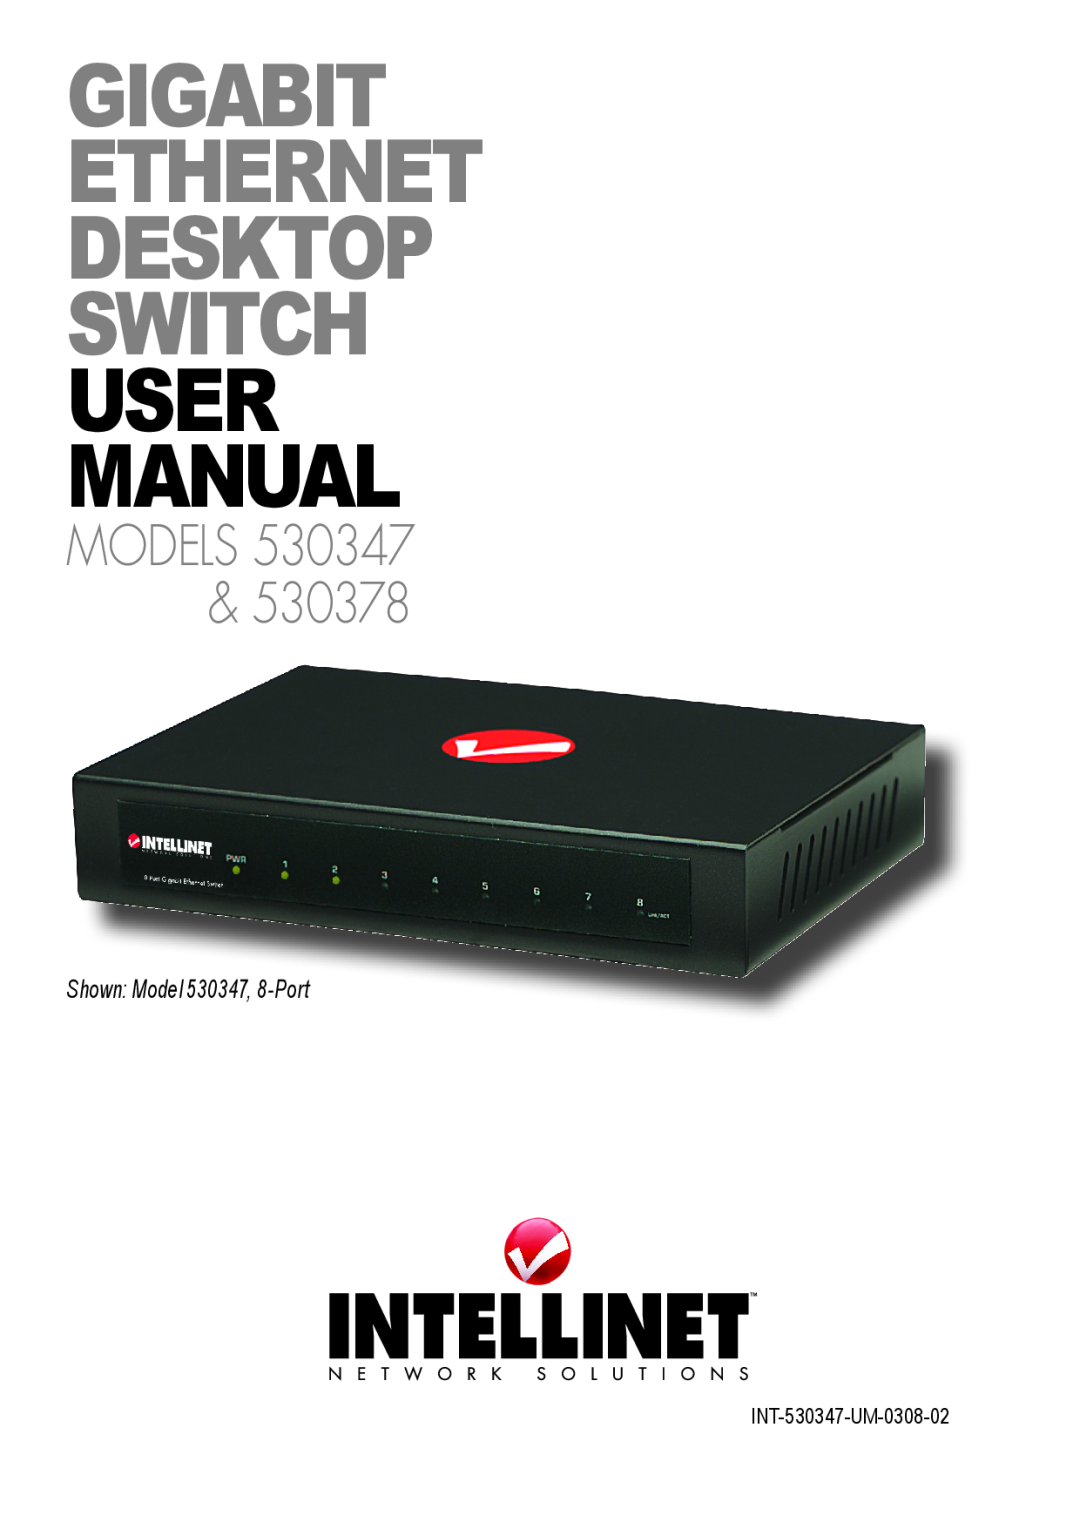 Intellinet Network Solutions 530378 user manual Gigabit Ethernet Desktop Switch user manual, Models 530347 